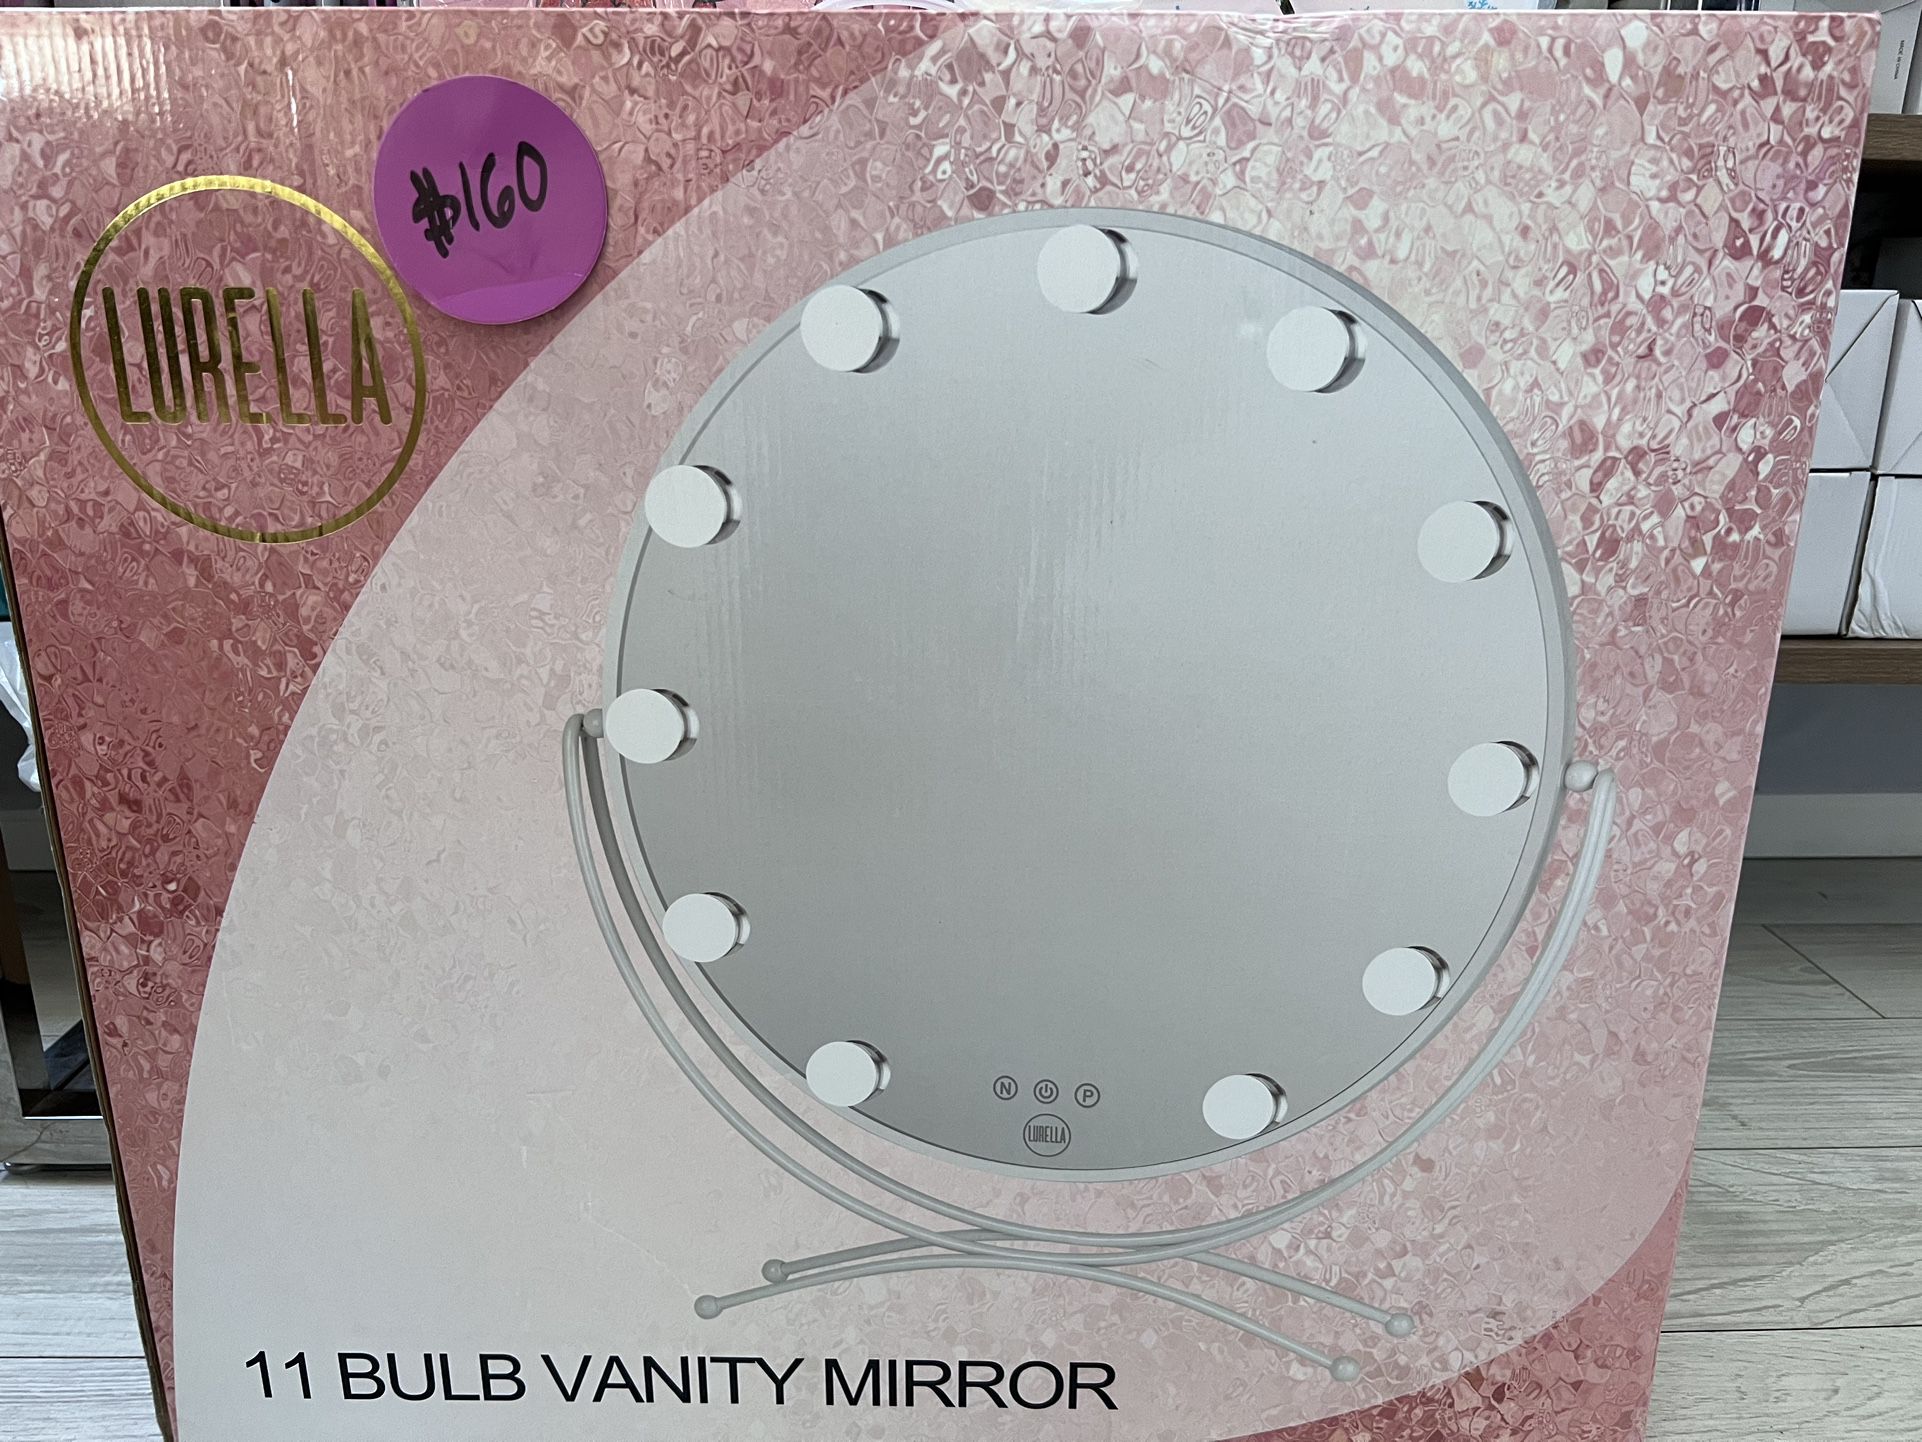 Lurella Cosmetics 11 Bulb Round Vanity Mirror 